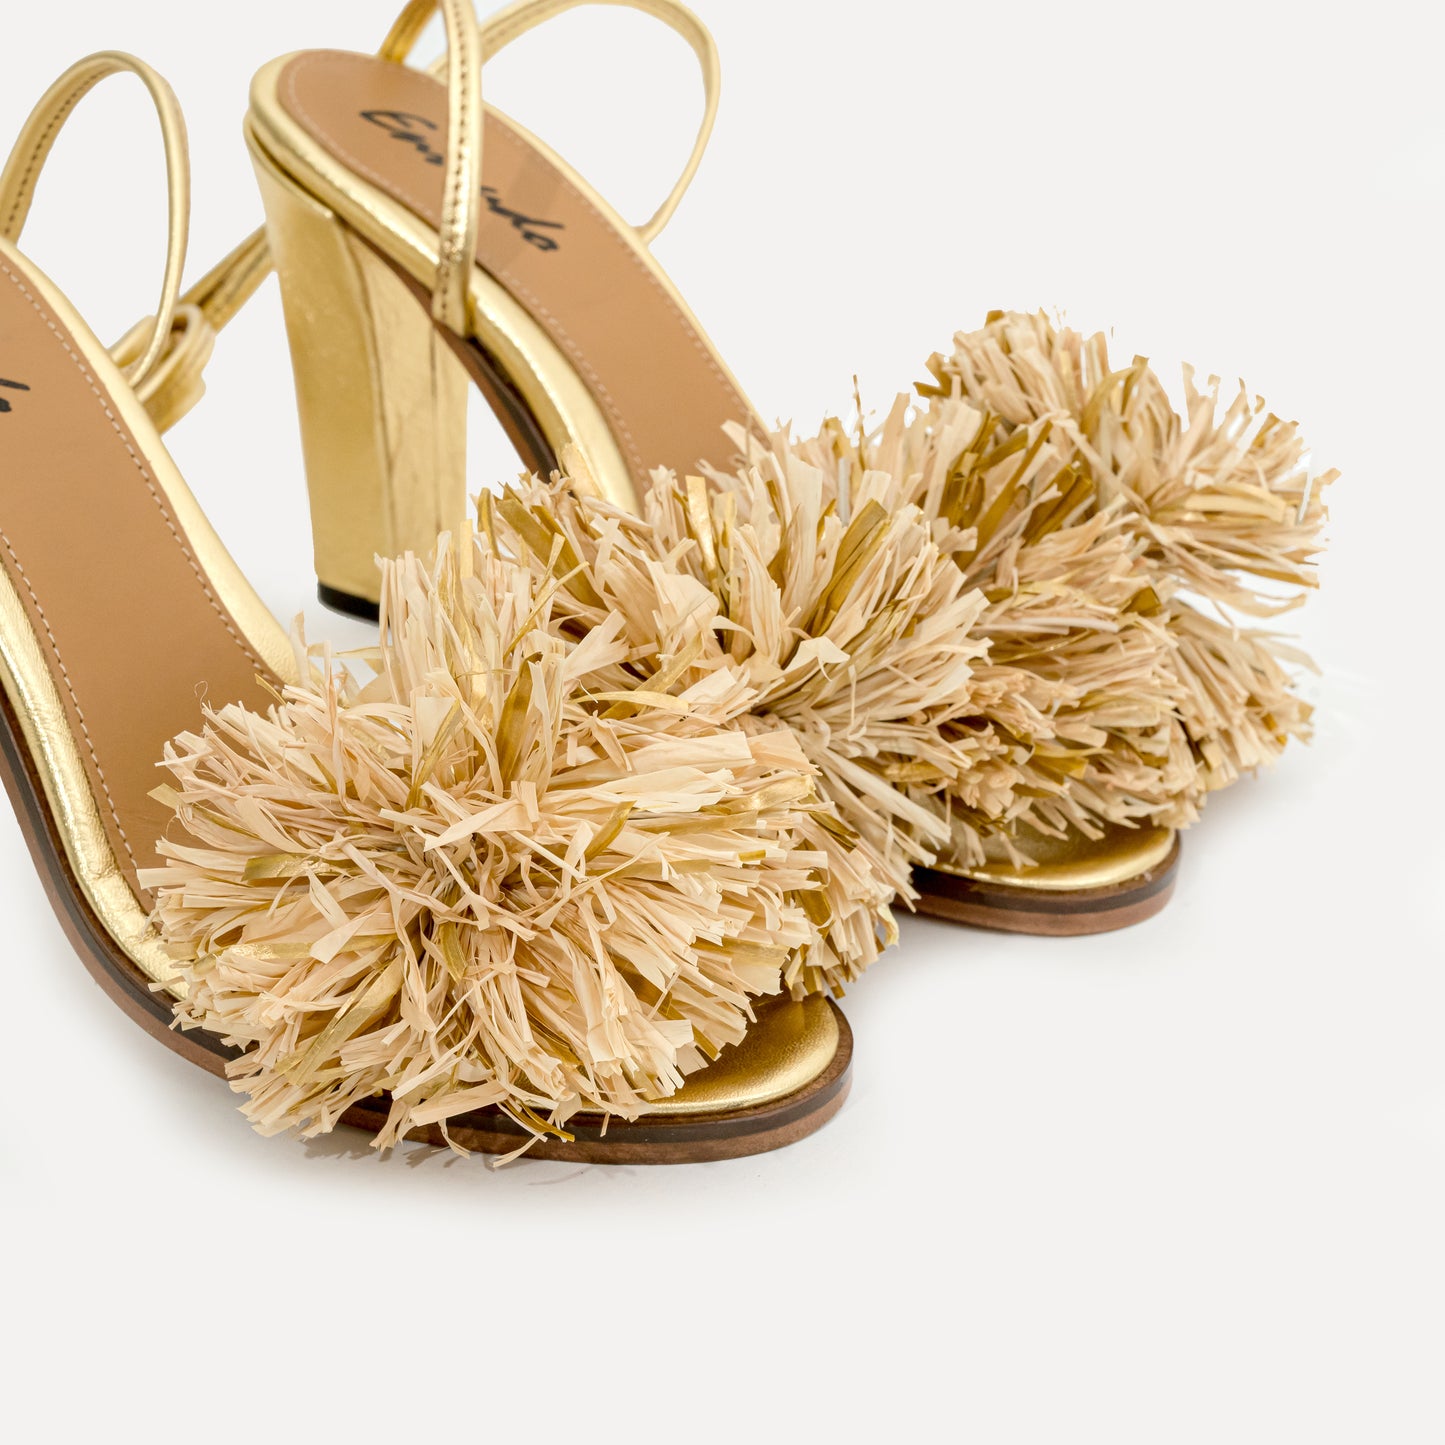 Lalim - high heel sandals with handmade raffia flowers